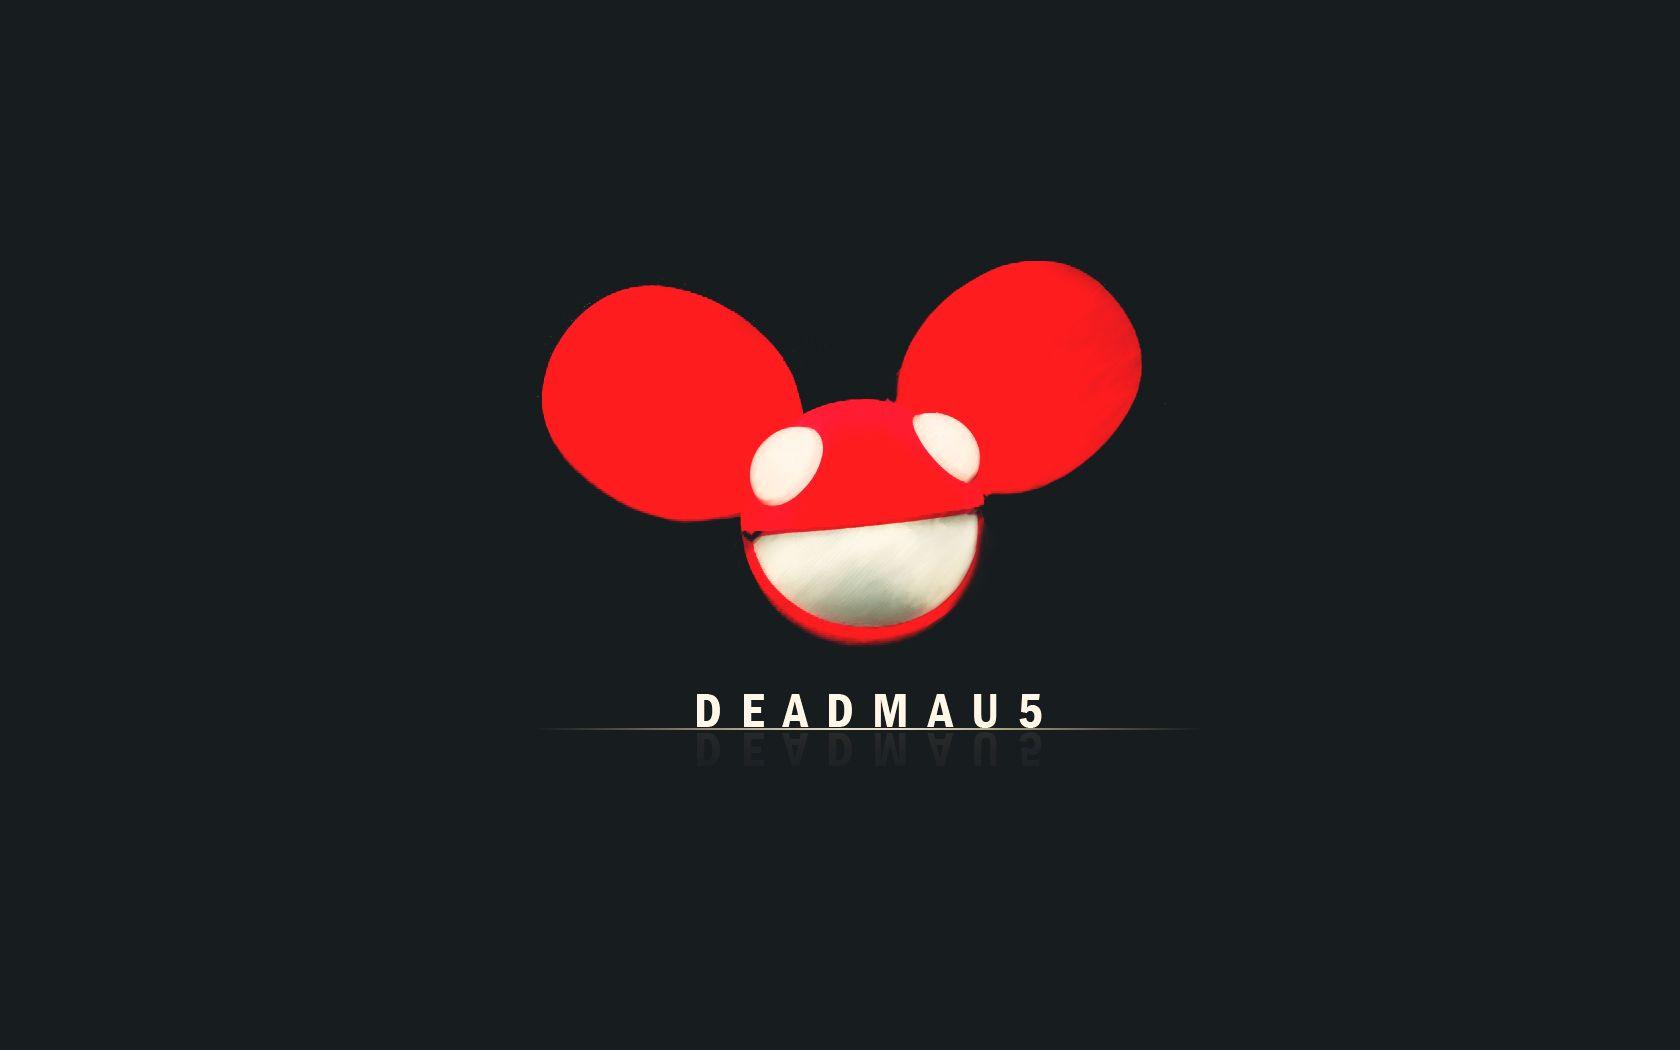 Deadmau5 Logo HD Wallpaper, Background Image